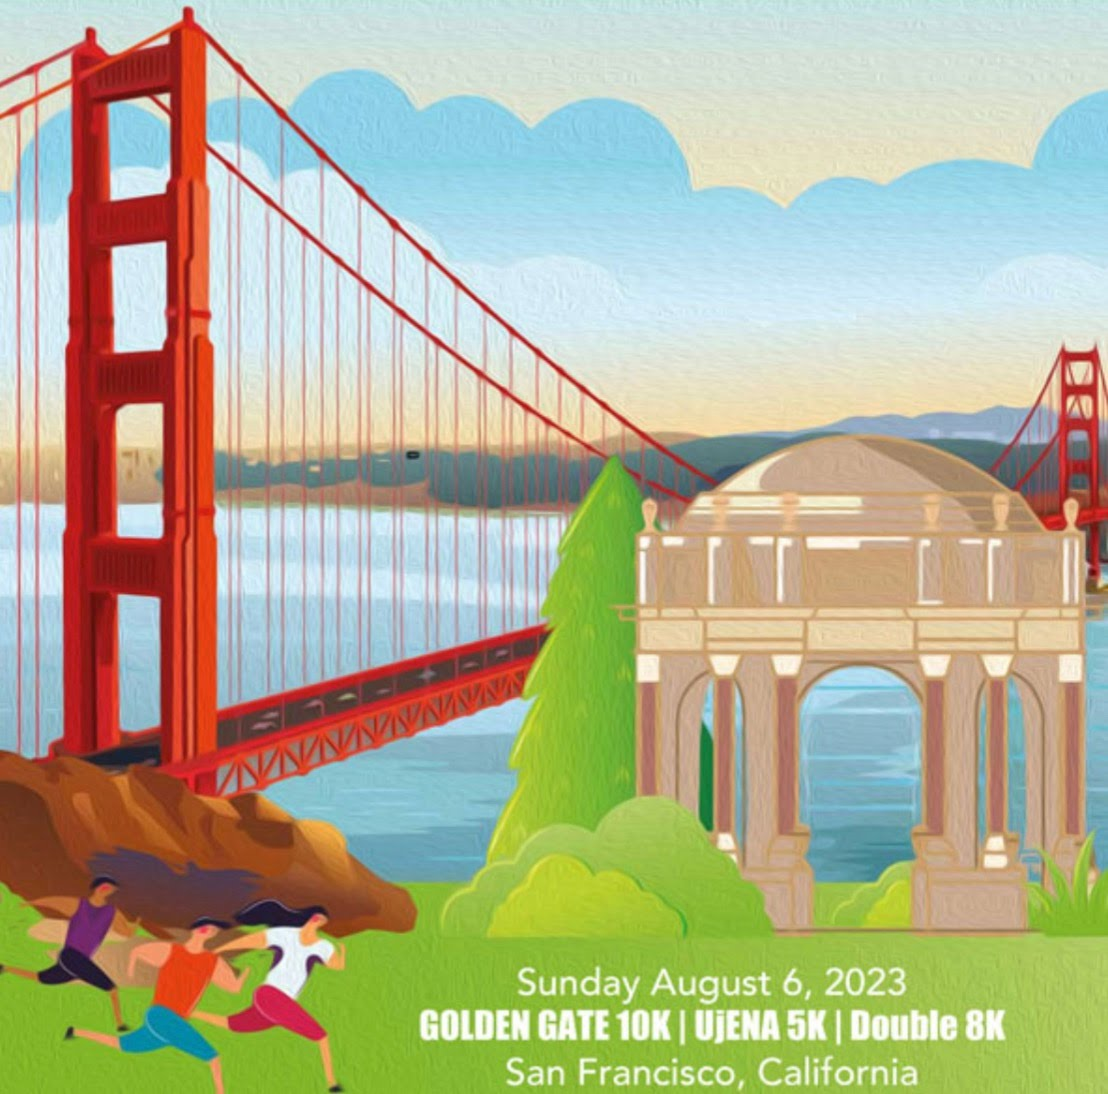 Golden Gate Aug 6, 2023